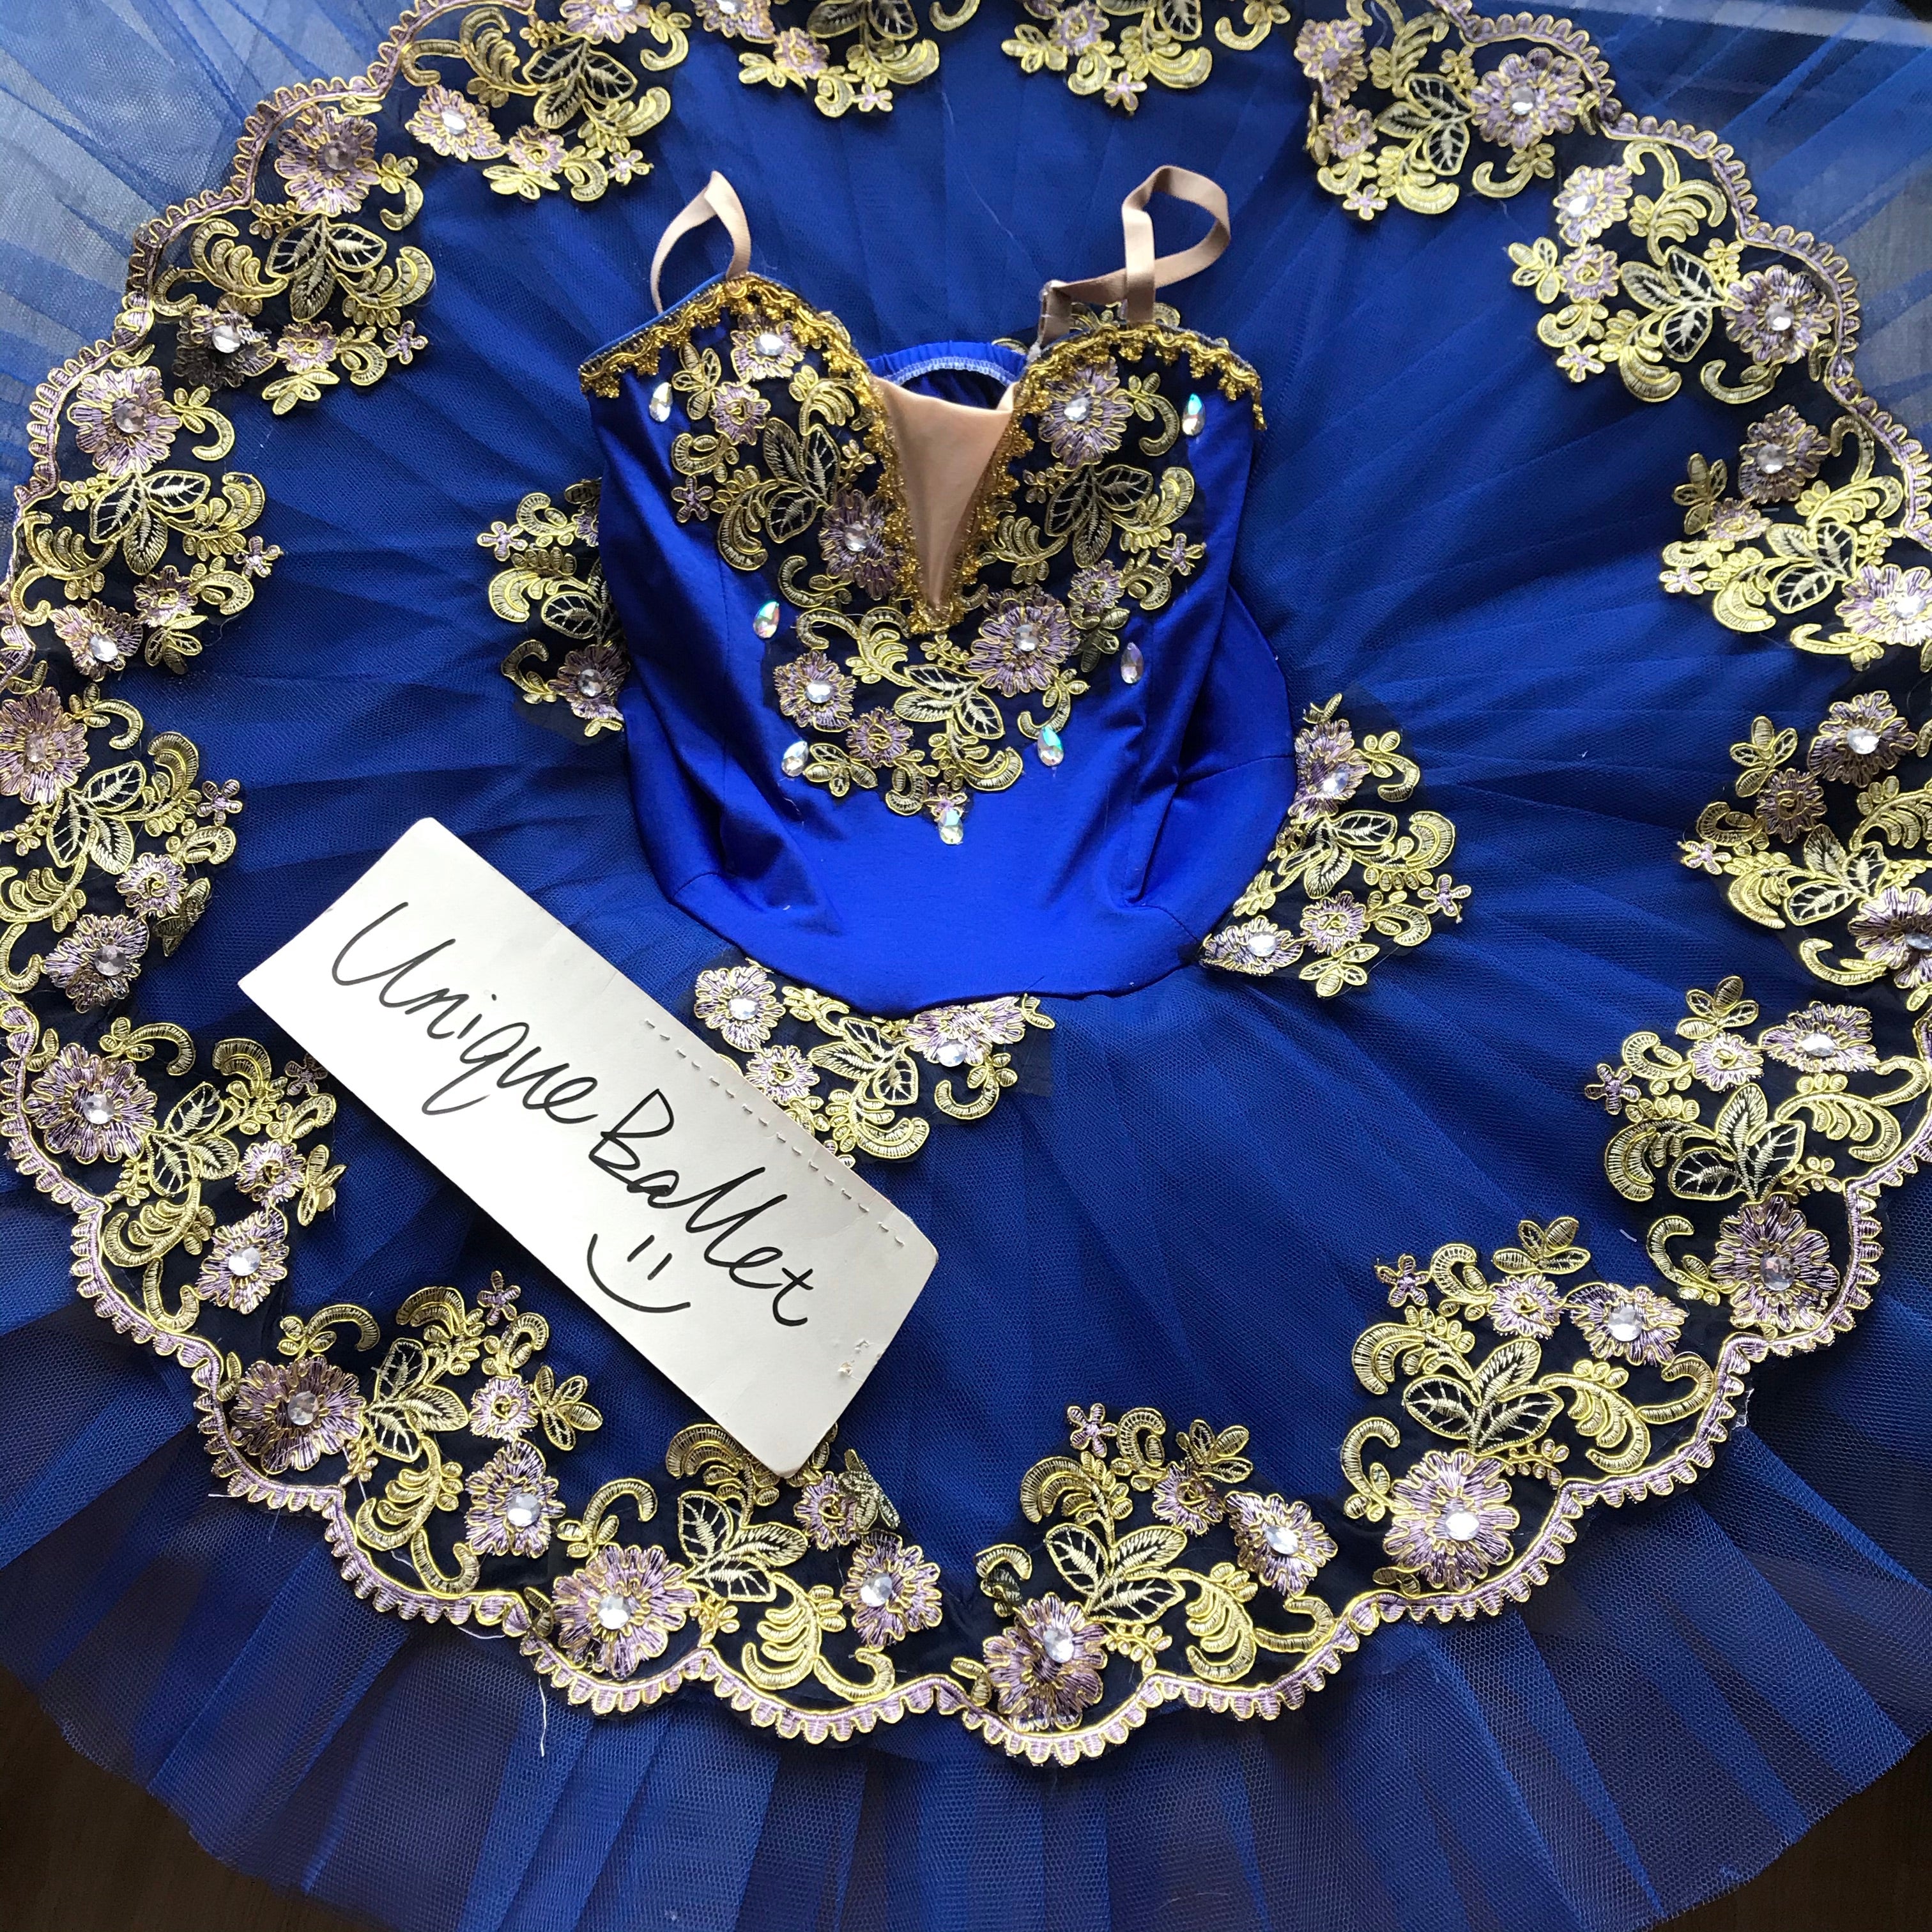 Royal Blue Golden Floral Trims Classical Ballet TuTu Costume (Unprofessional)-5CRBLUBROWFLW